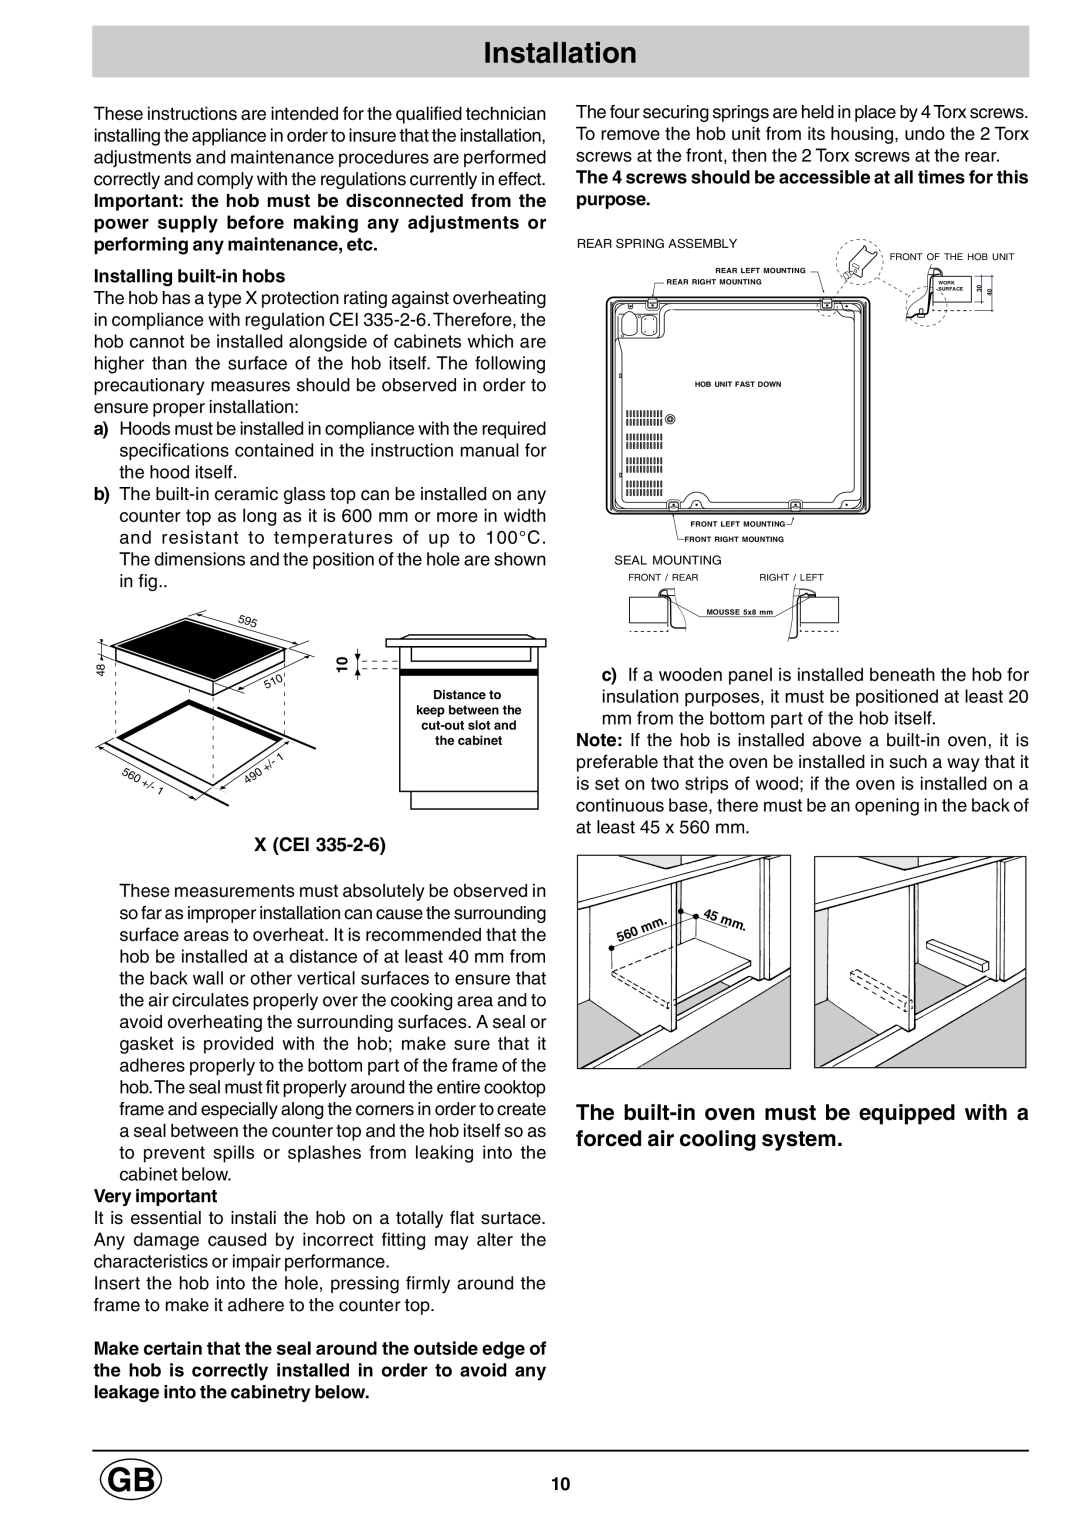 Hotpoint E6004 manual Installation, X Cei, Installing built-inhobs, Very important 